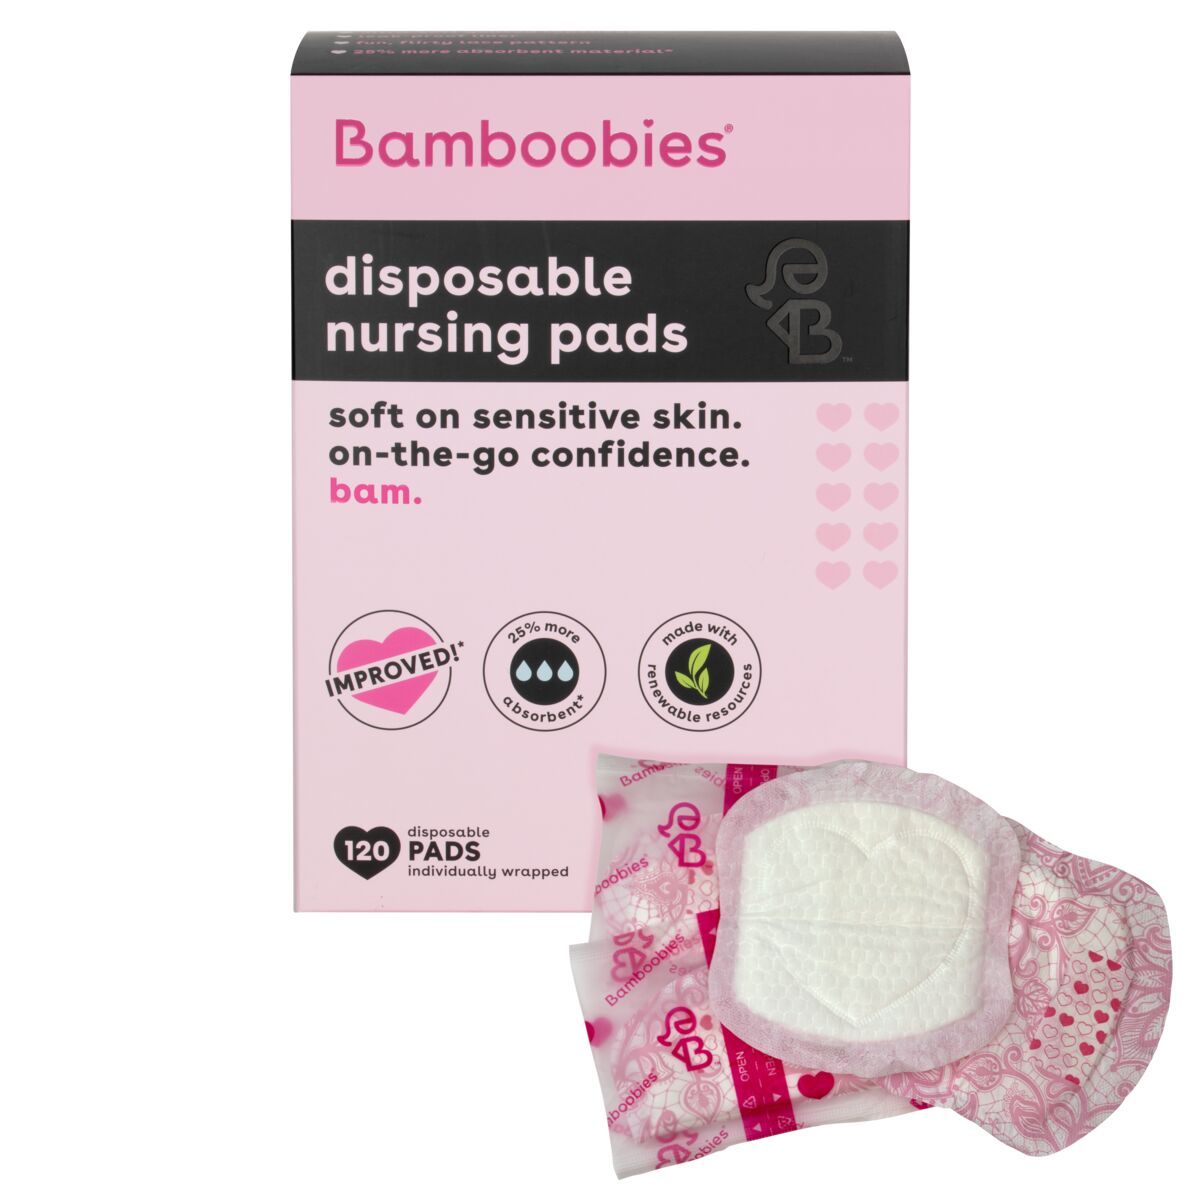 Bamboobies disposable nursing pads (120 count)